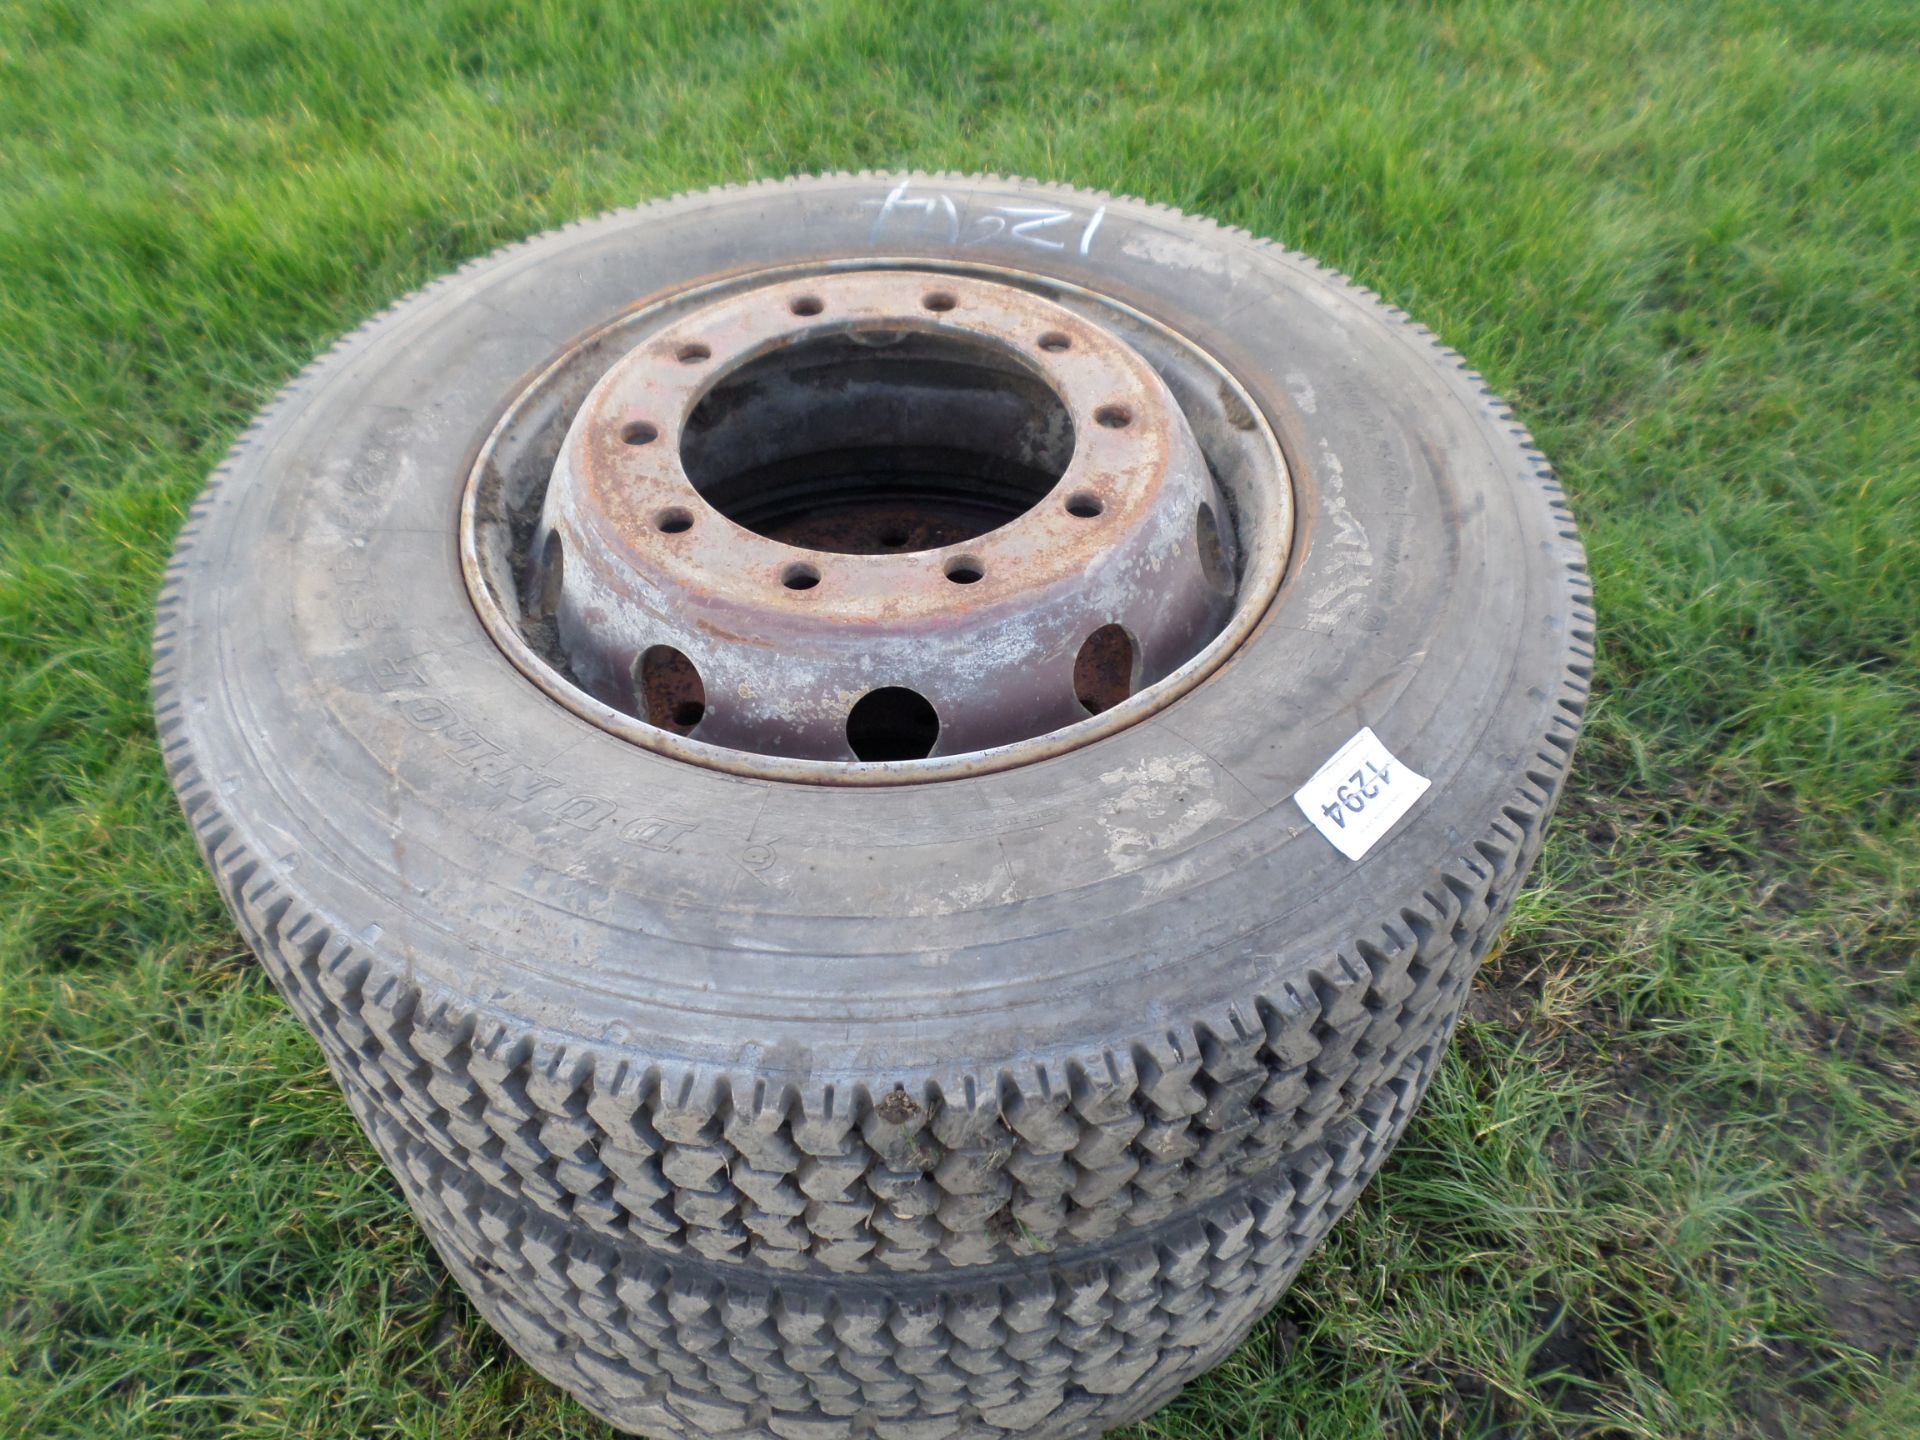 2 part worn tyres on rims 11/22.5 NO VAT - Image 2 of 2